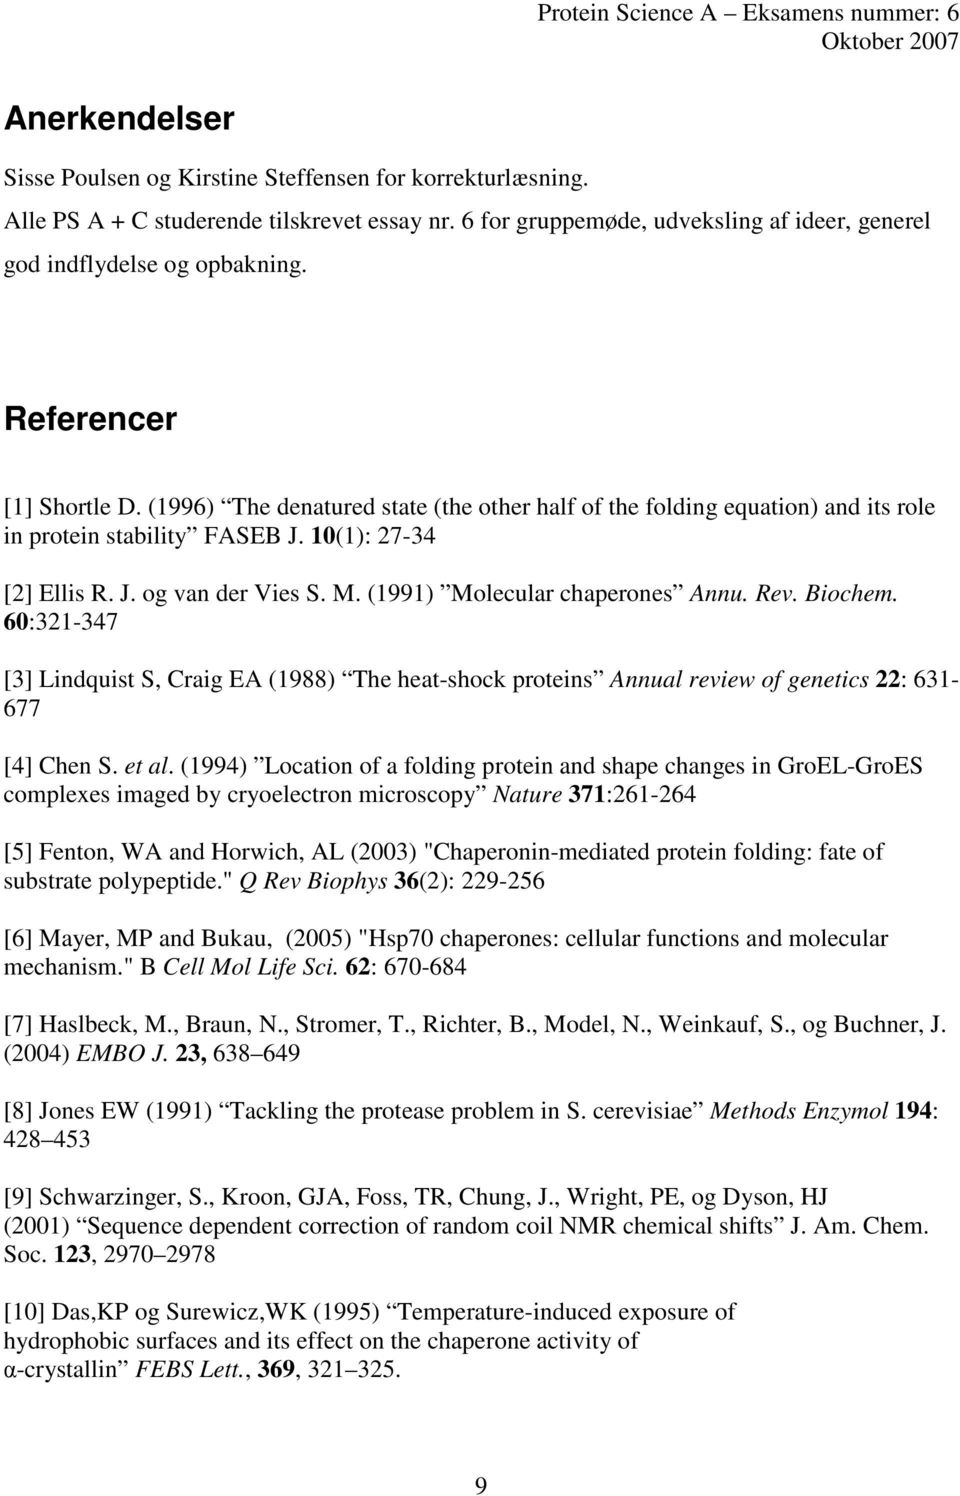 (1991) Molecular chaperones Annu. Rev. Biochem. 60:321-347 [3] Lindquist S, Craig EA (1988) The heat-shock proteins Annual review of genetics 22: 631-677 [4] Chen S. et al.